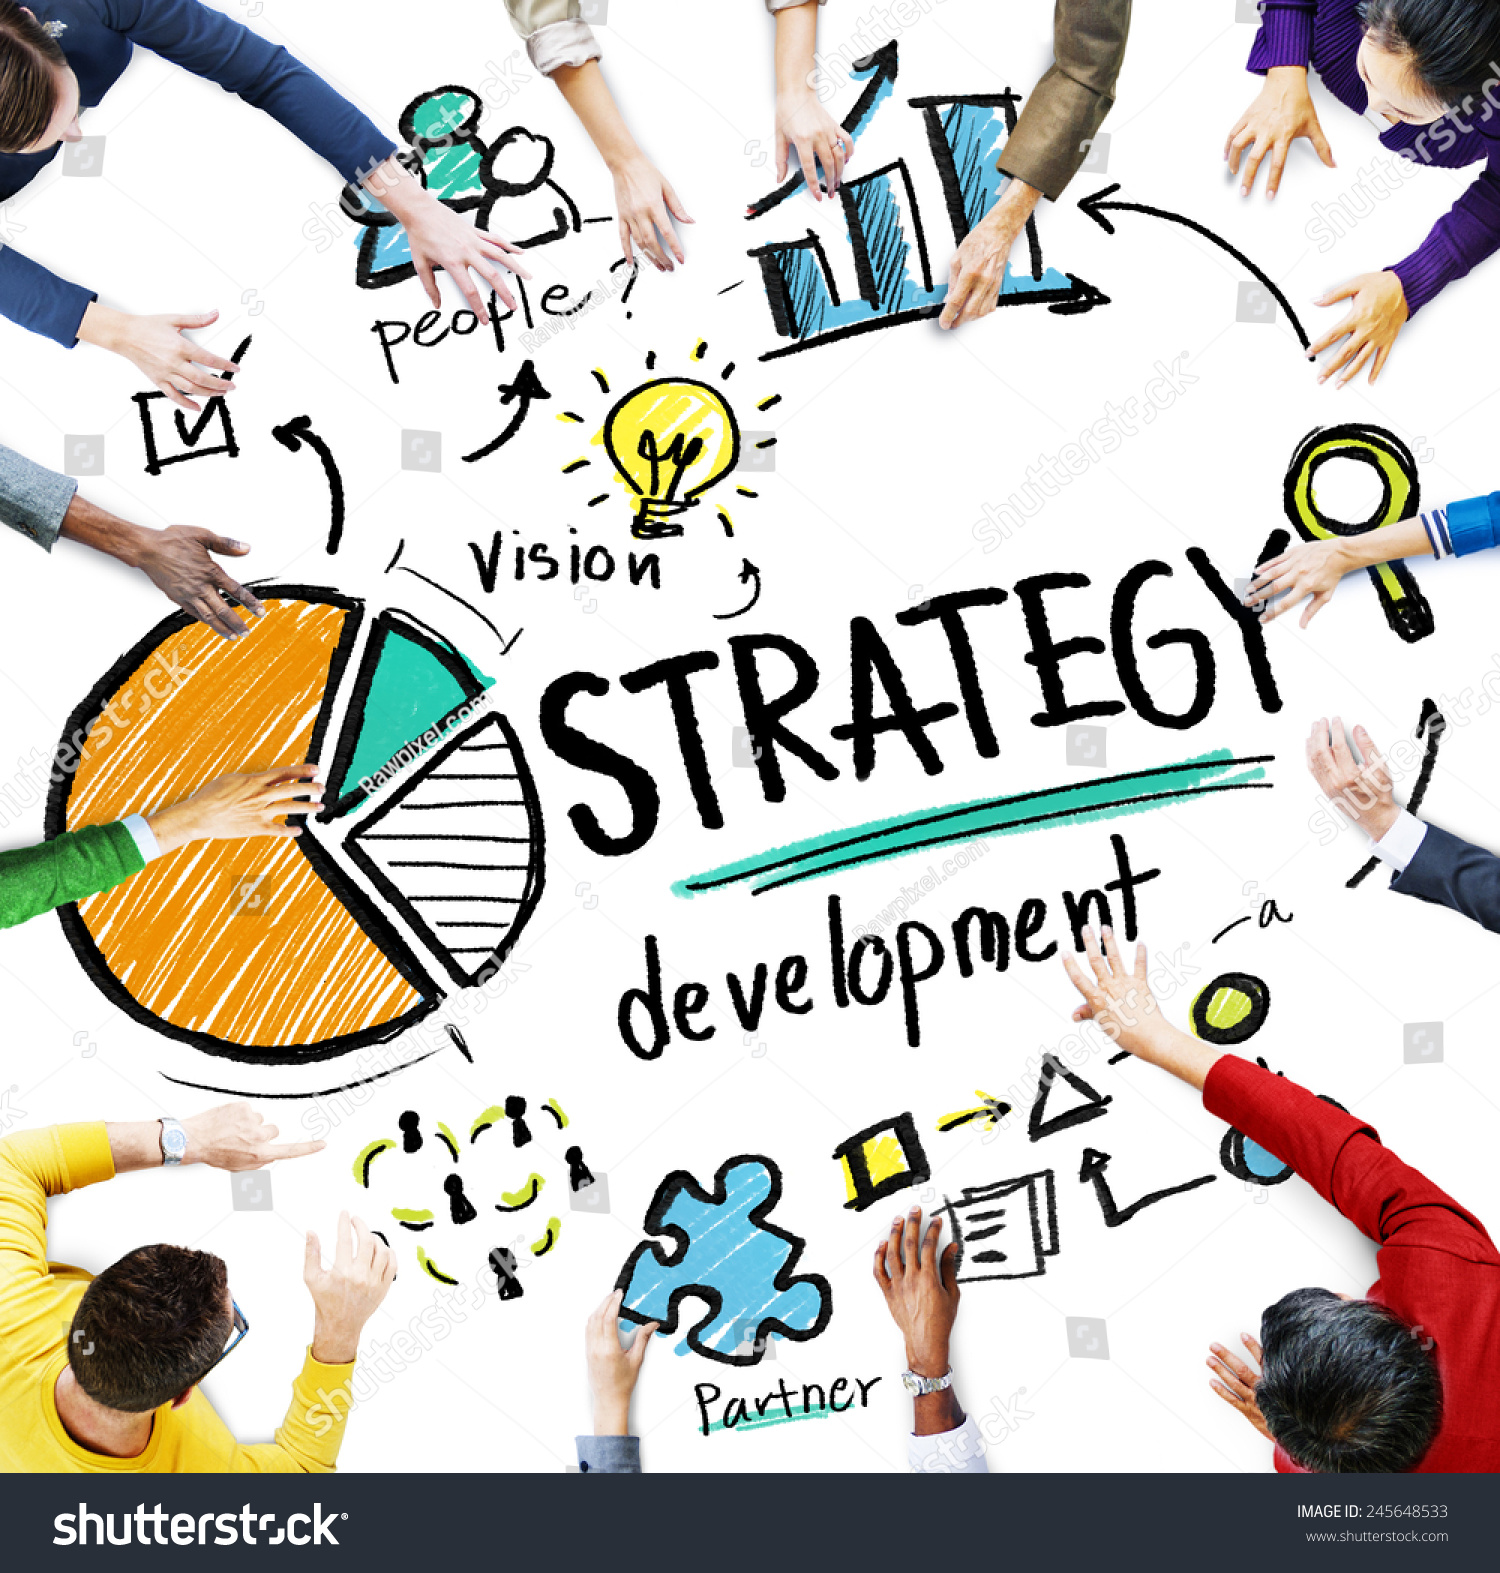 Tinder. Foreros medios hablando sobre técnicas de cortejo - Página 10 Stock-photo-strategy-development-goal-marketing-vision-planning-business-concept-245648533